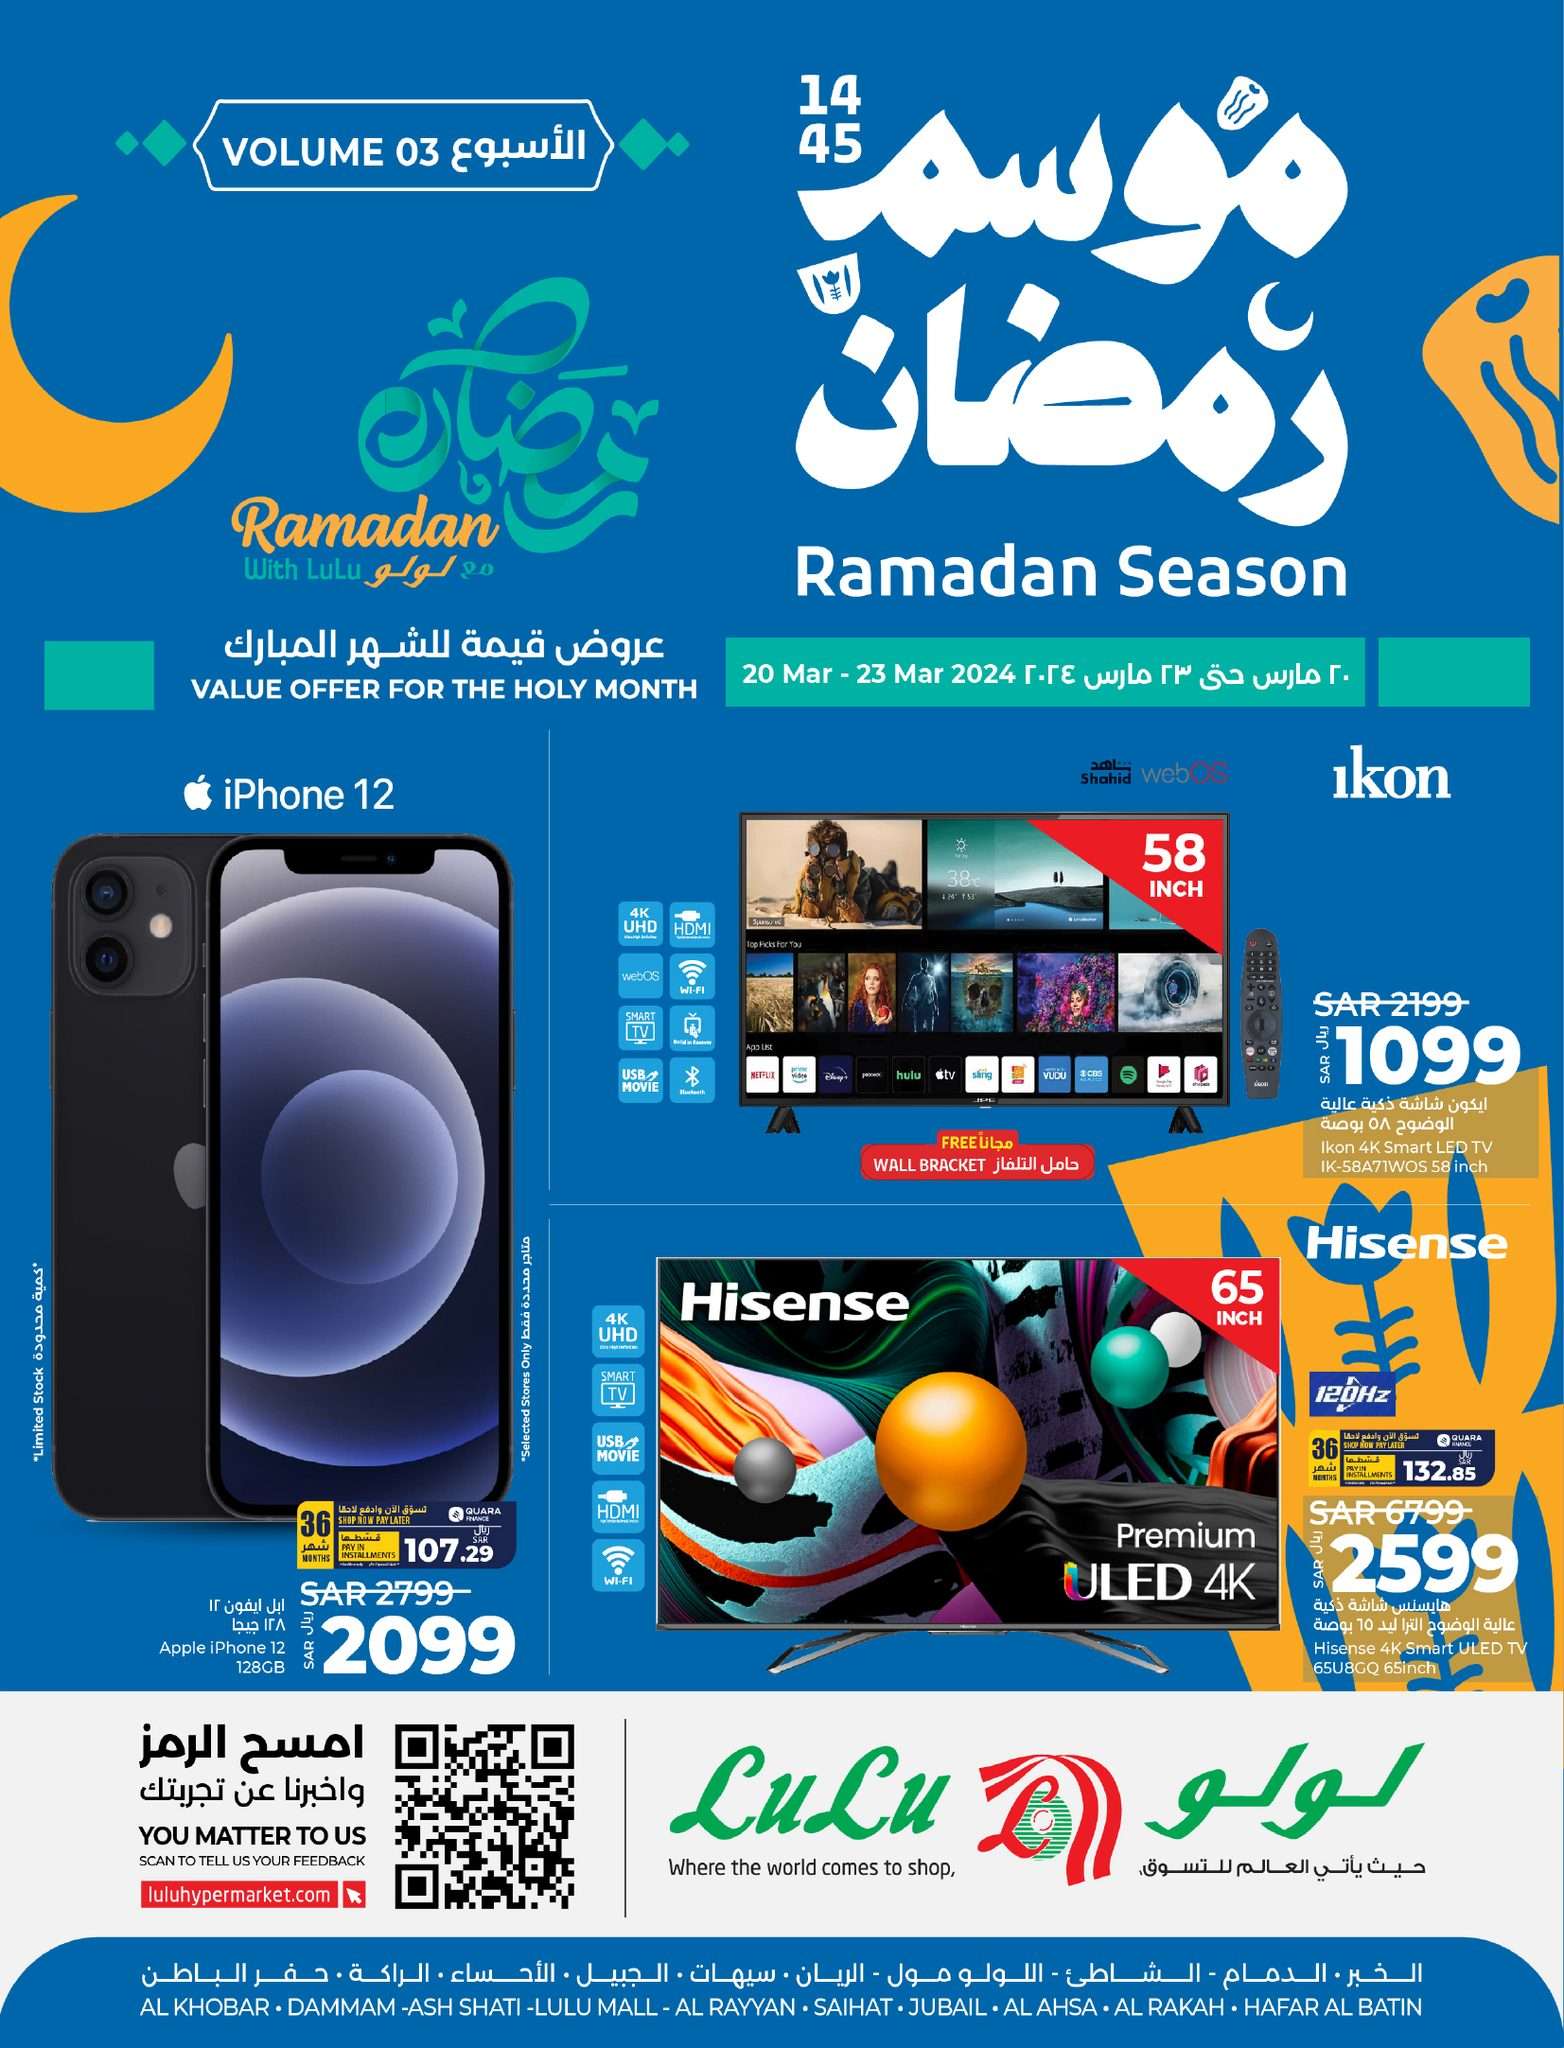 FjL0uH - عروض رمضان 2024 : عروض لولو المنطقة الشرقية صفحة واحدة علي الألكترونيات الخميس 21 مارس 2024